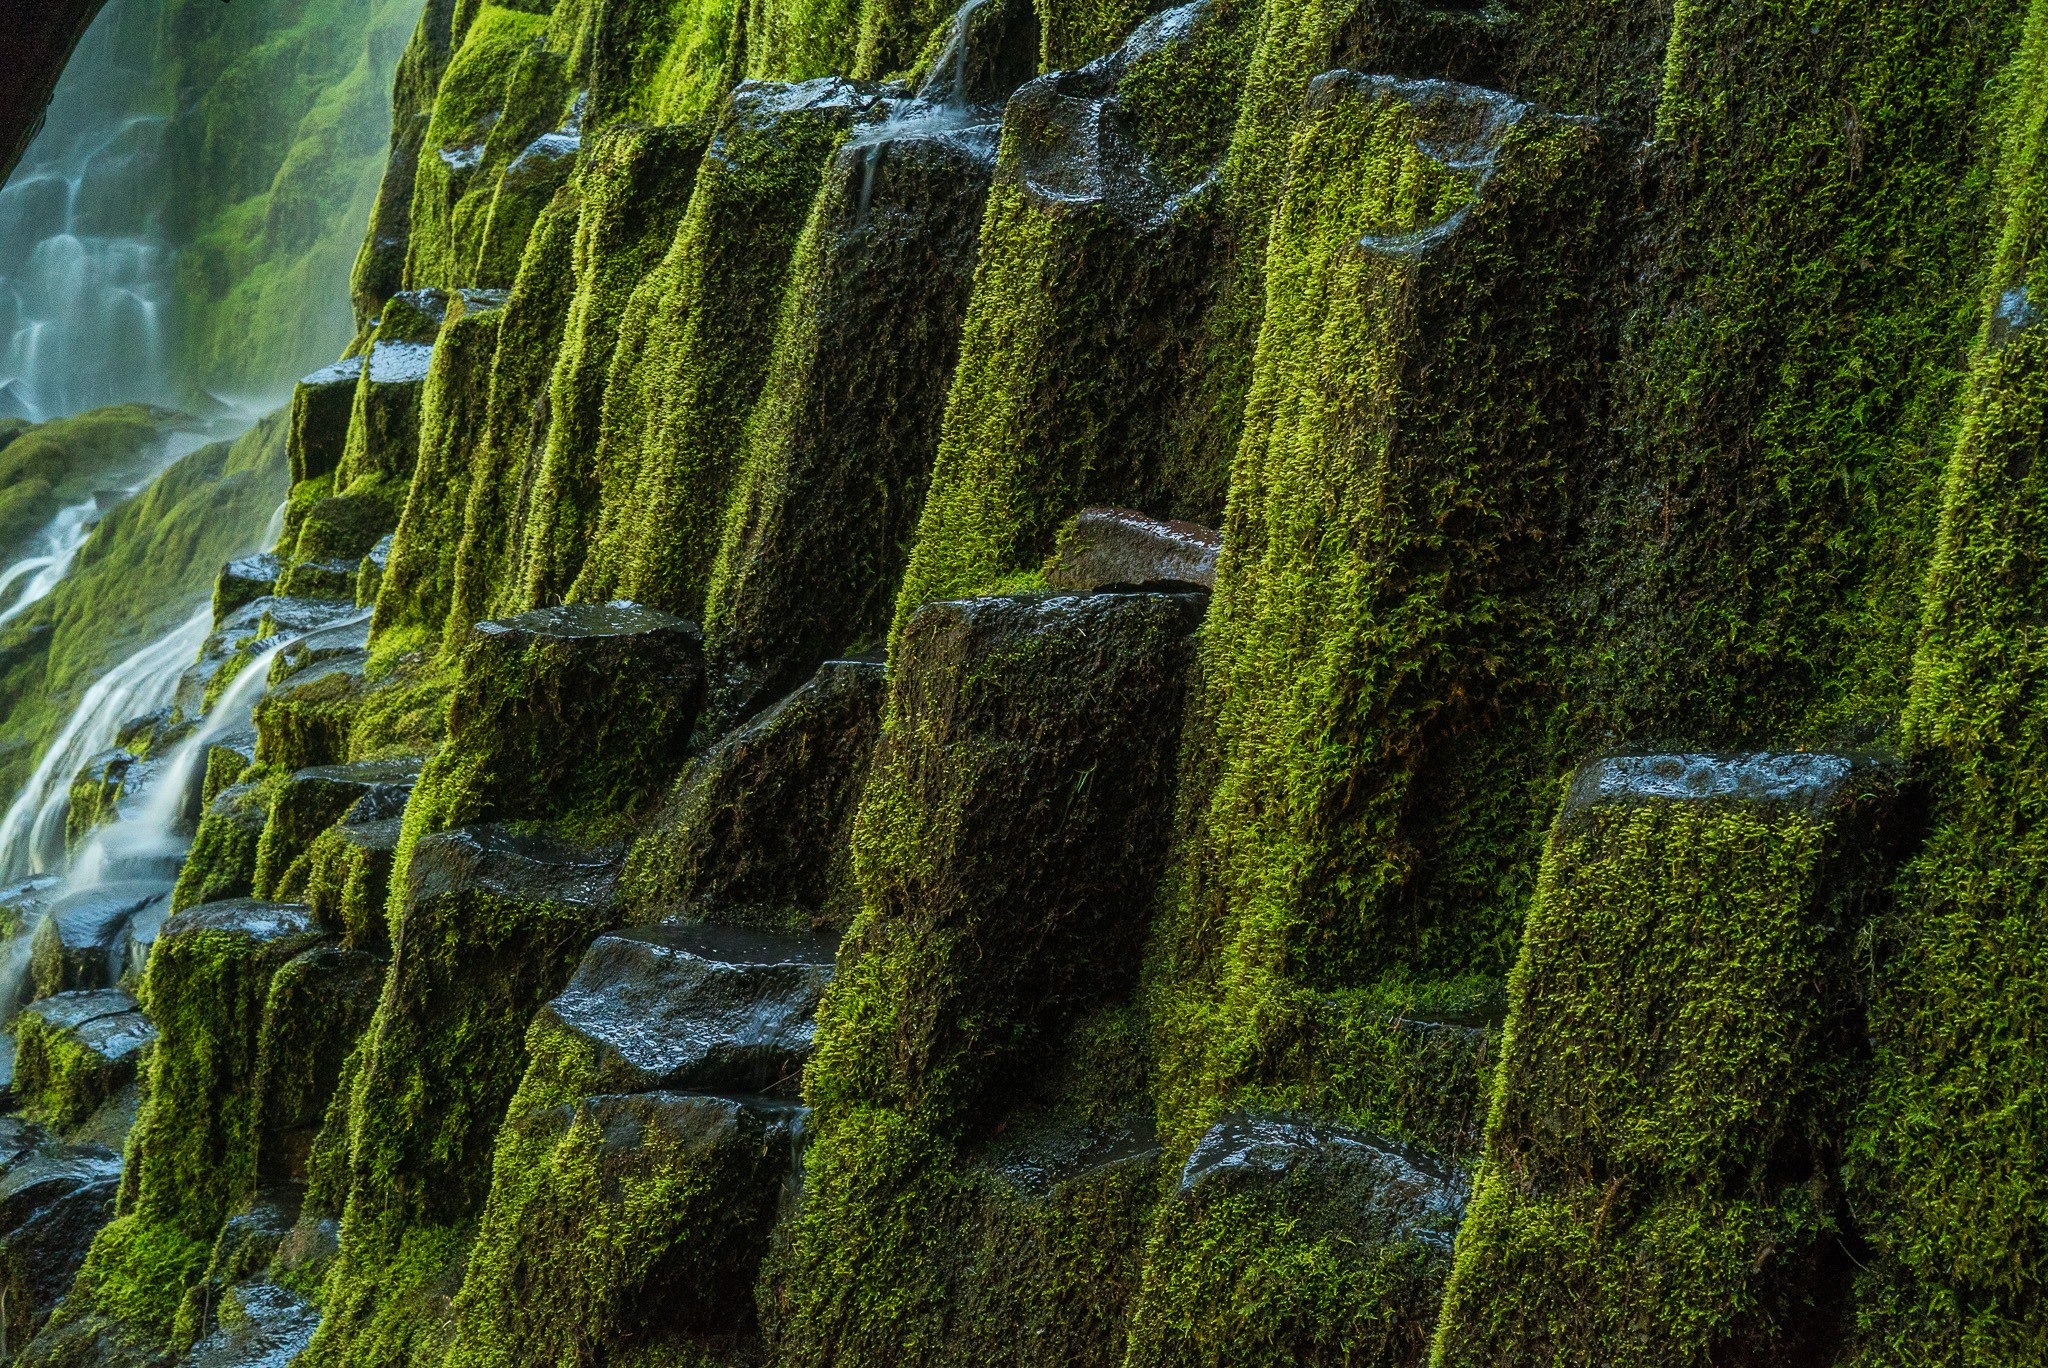 General 2048x1368 nature rocks rock formation moss waterfall long exposure Oregon USA national park